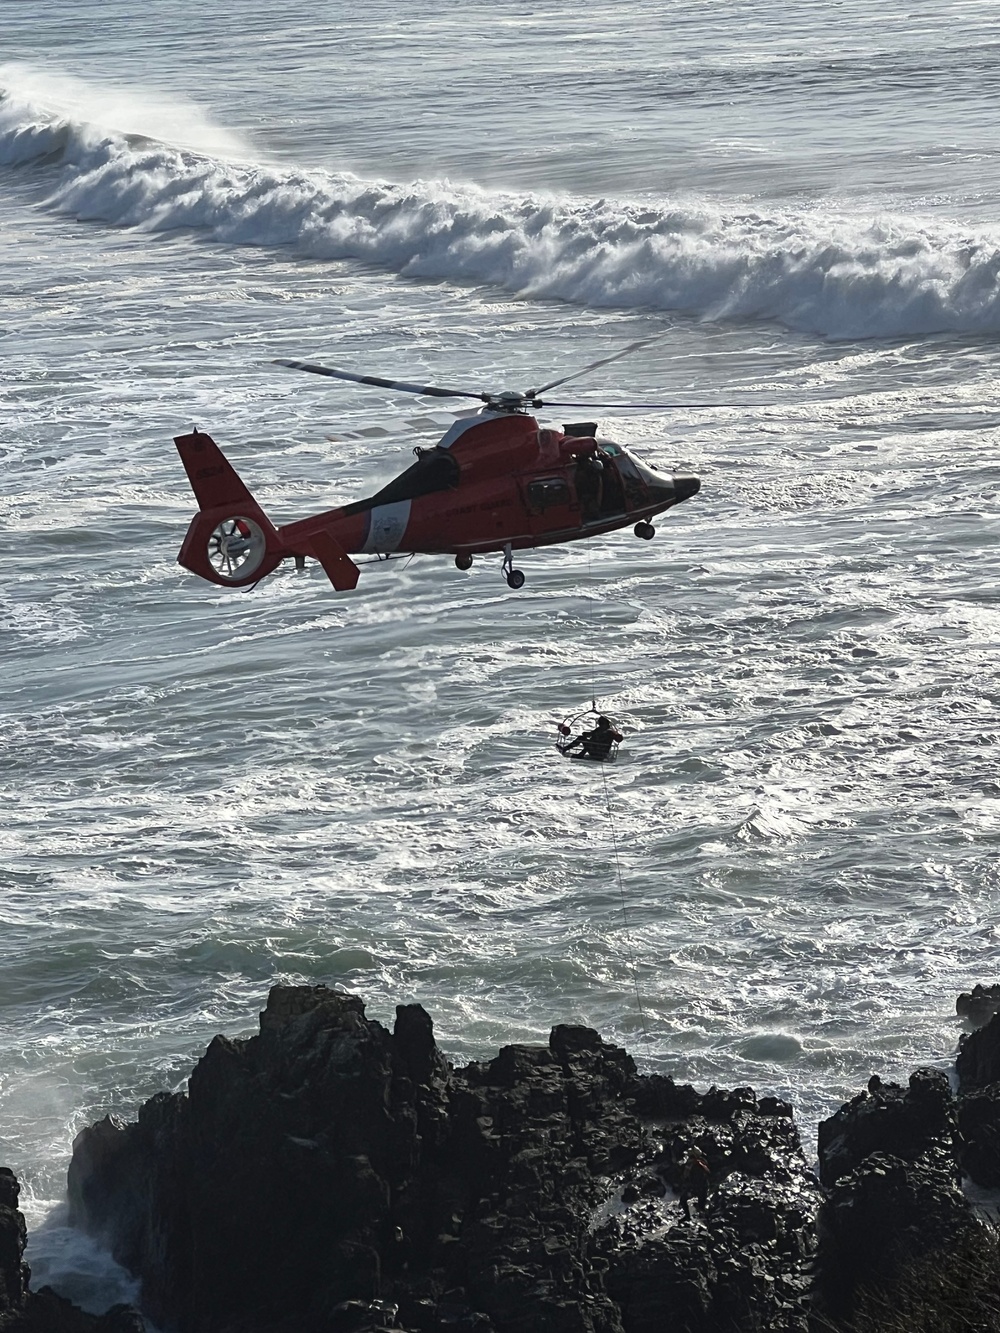 Coast Guard rescues 3 surfers near Agate Beach, OR